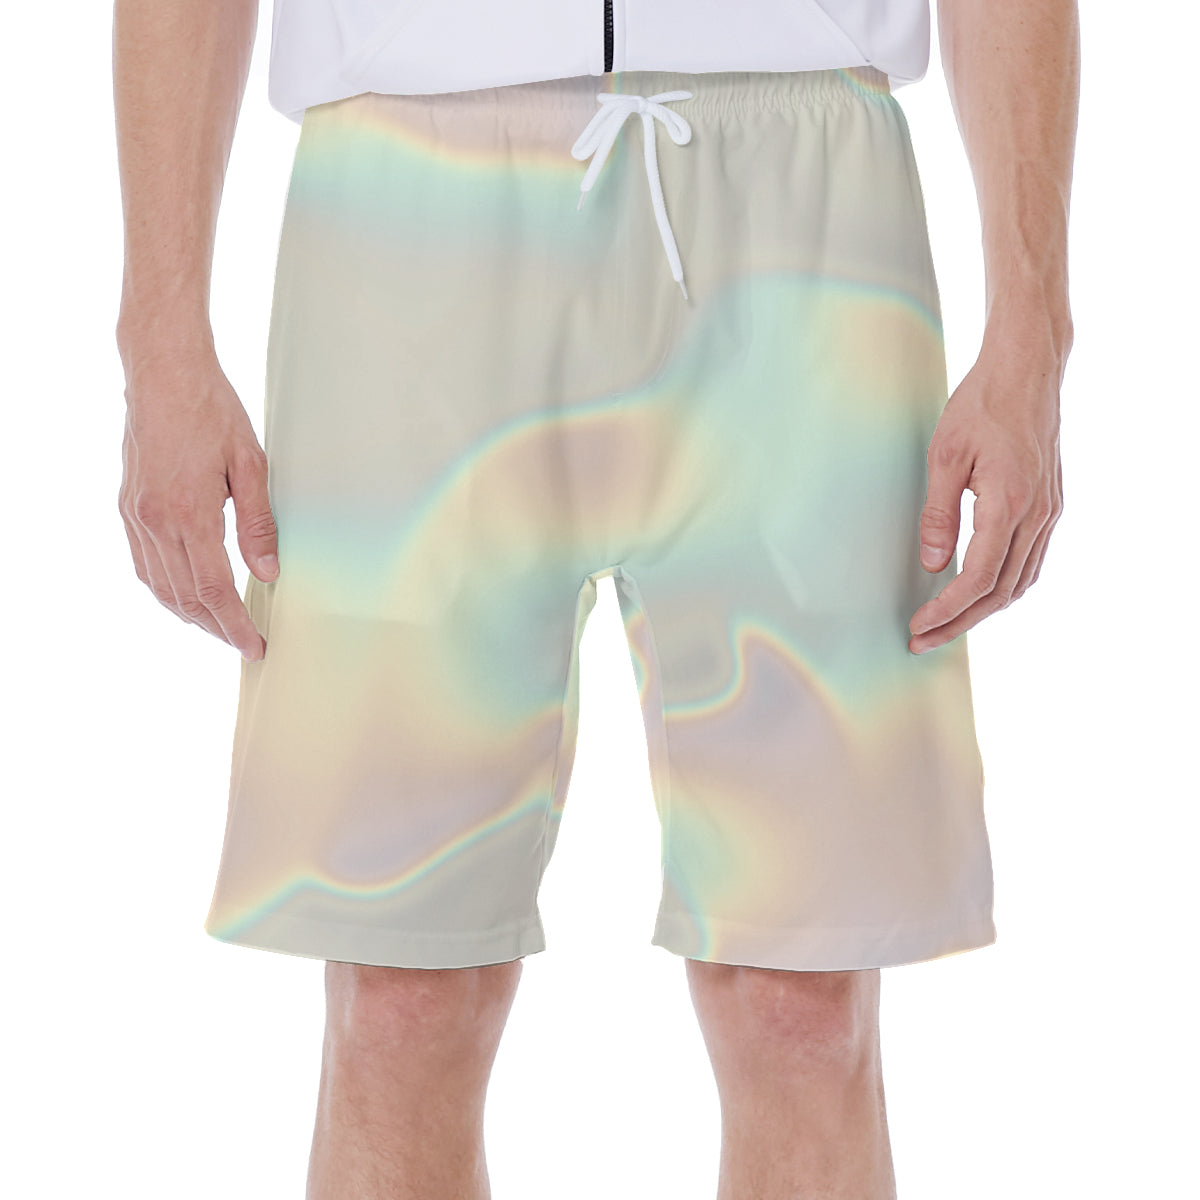 Ombre Iridescence Beach Style Cloud Print Men's Beach Hawaiian Shorts - kayzers